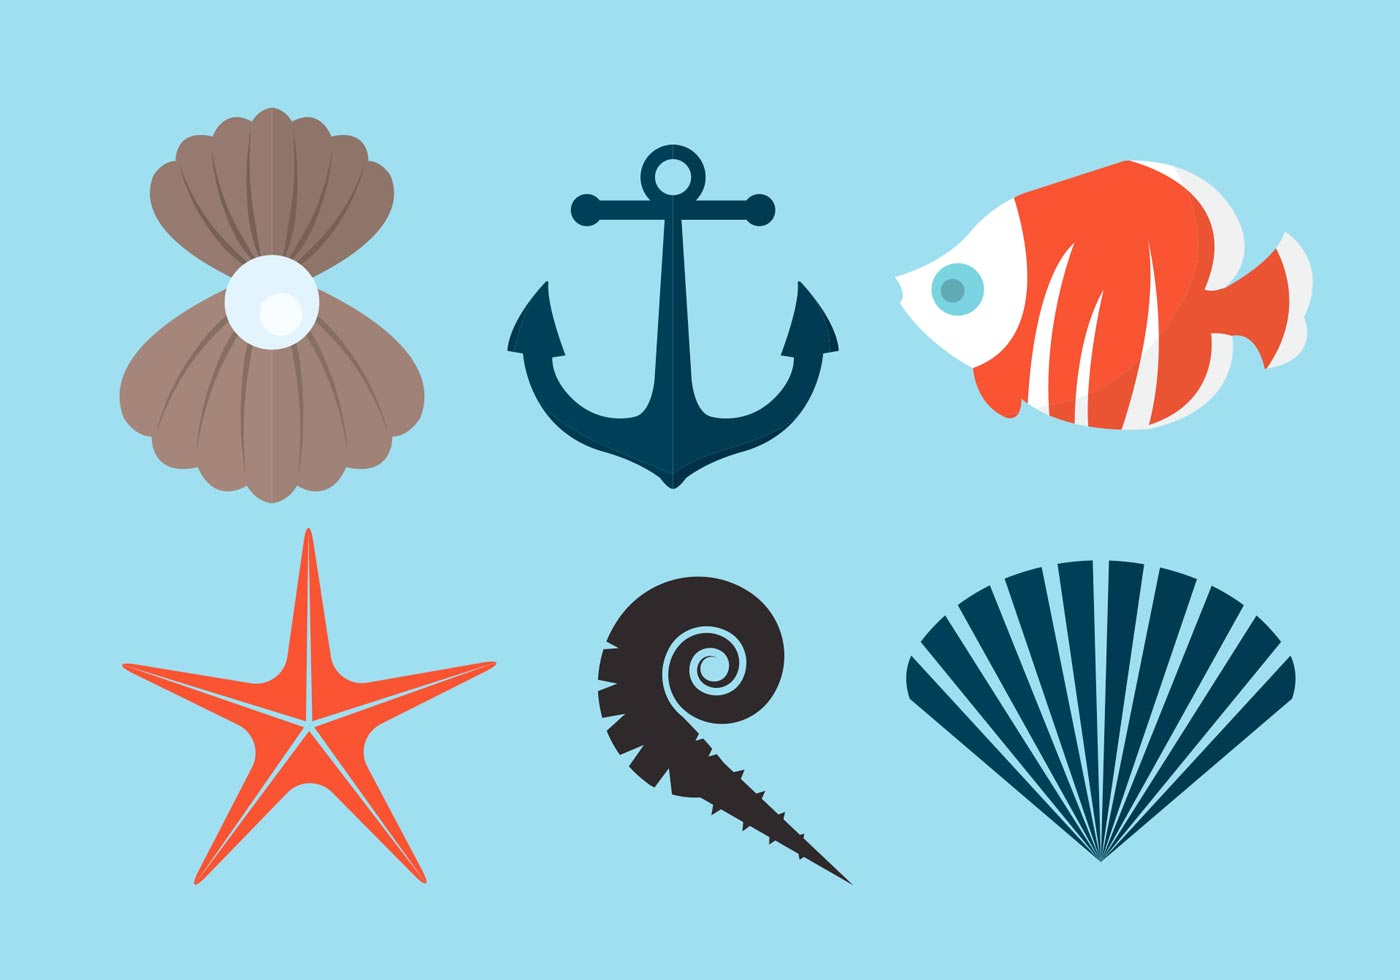 Free Vector Drawn Sea Shells - Download Free Vector Art, Stock